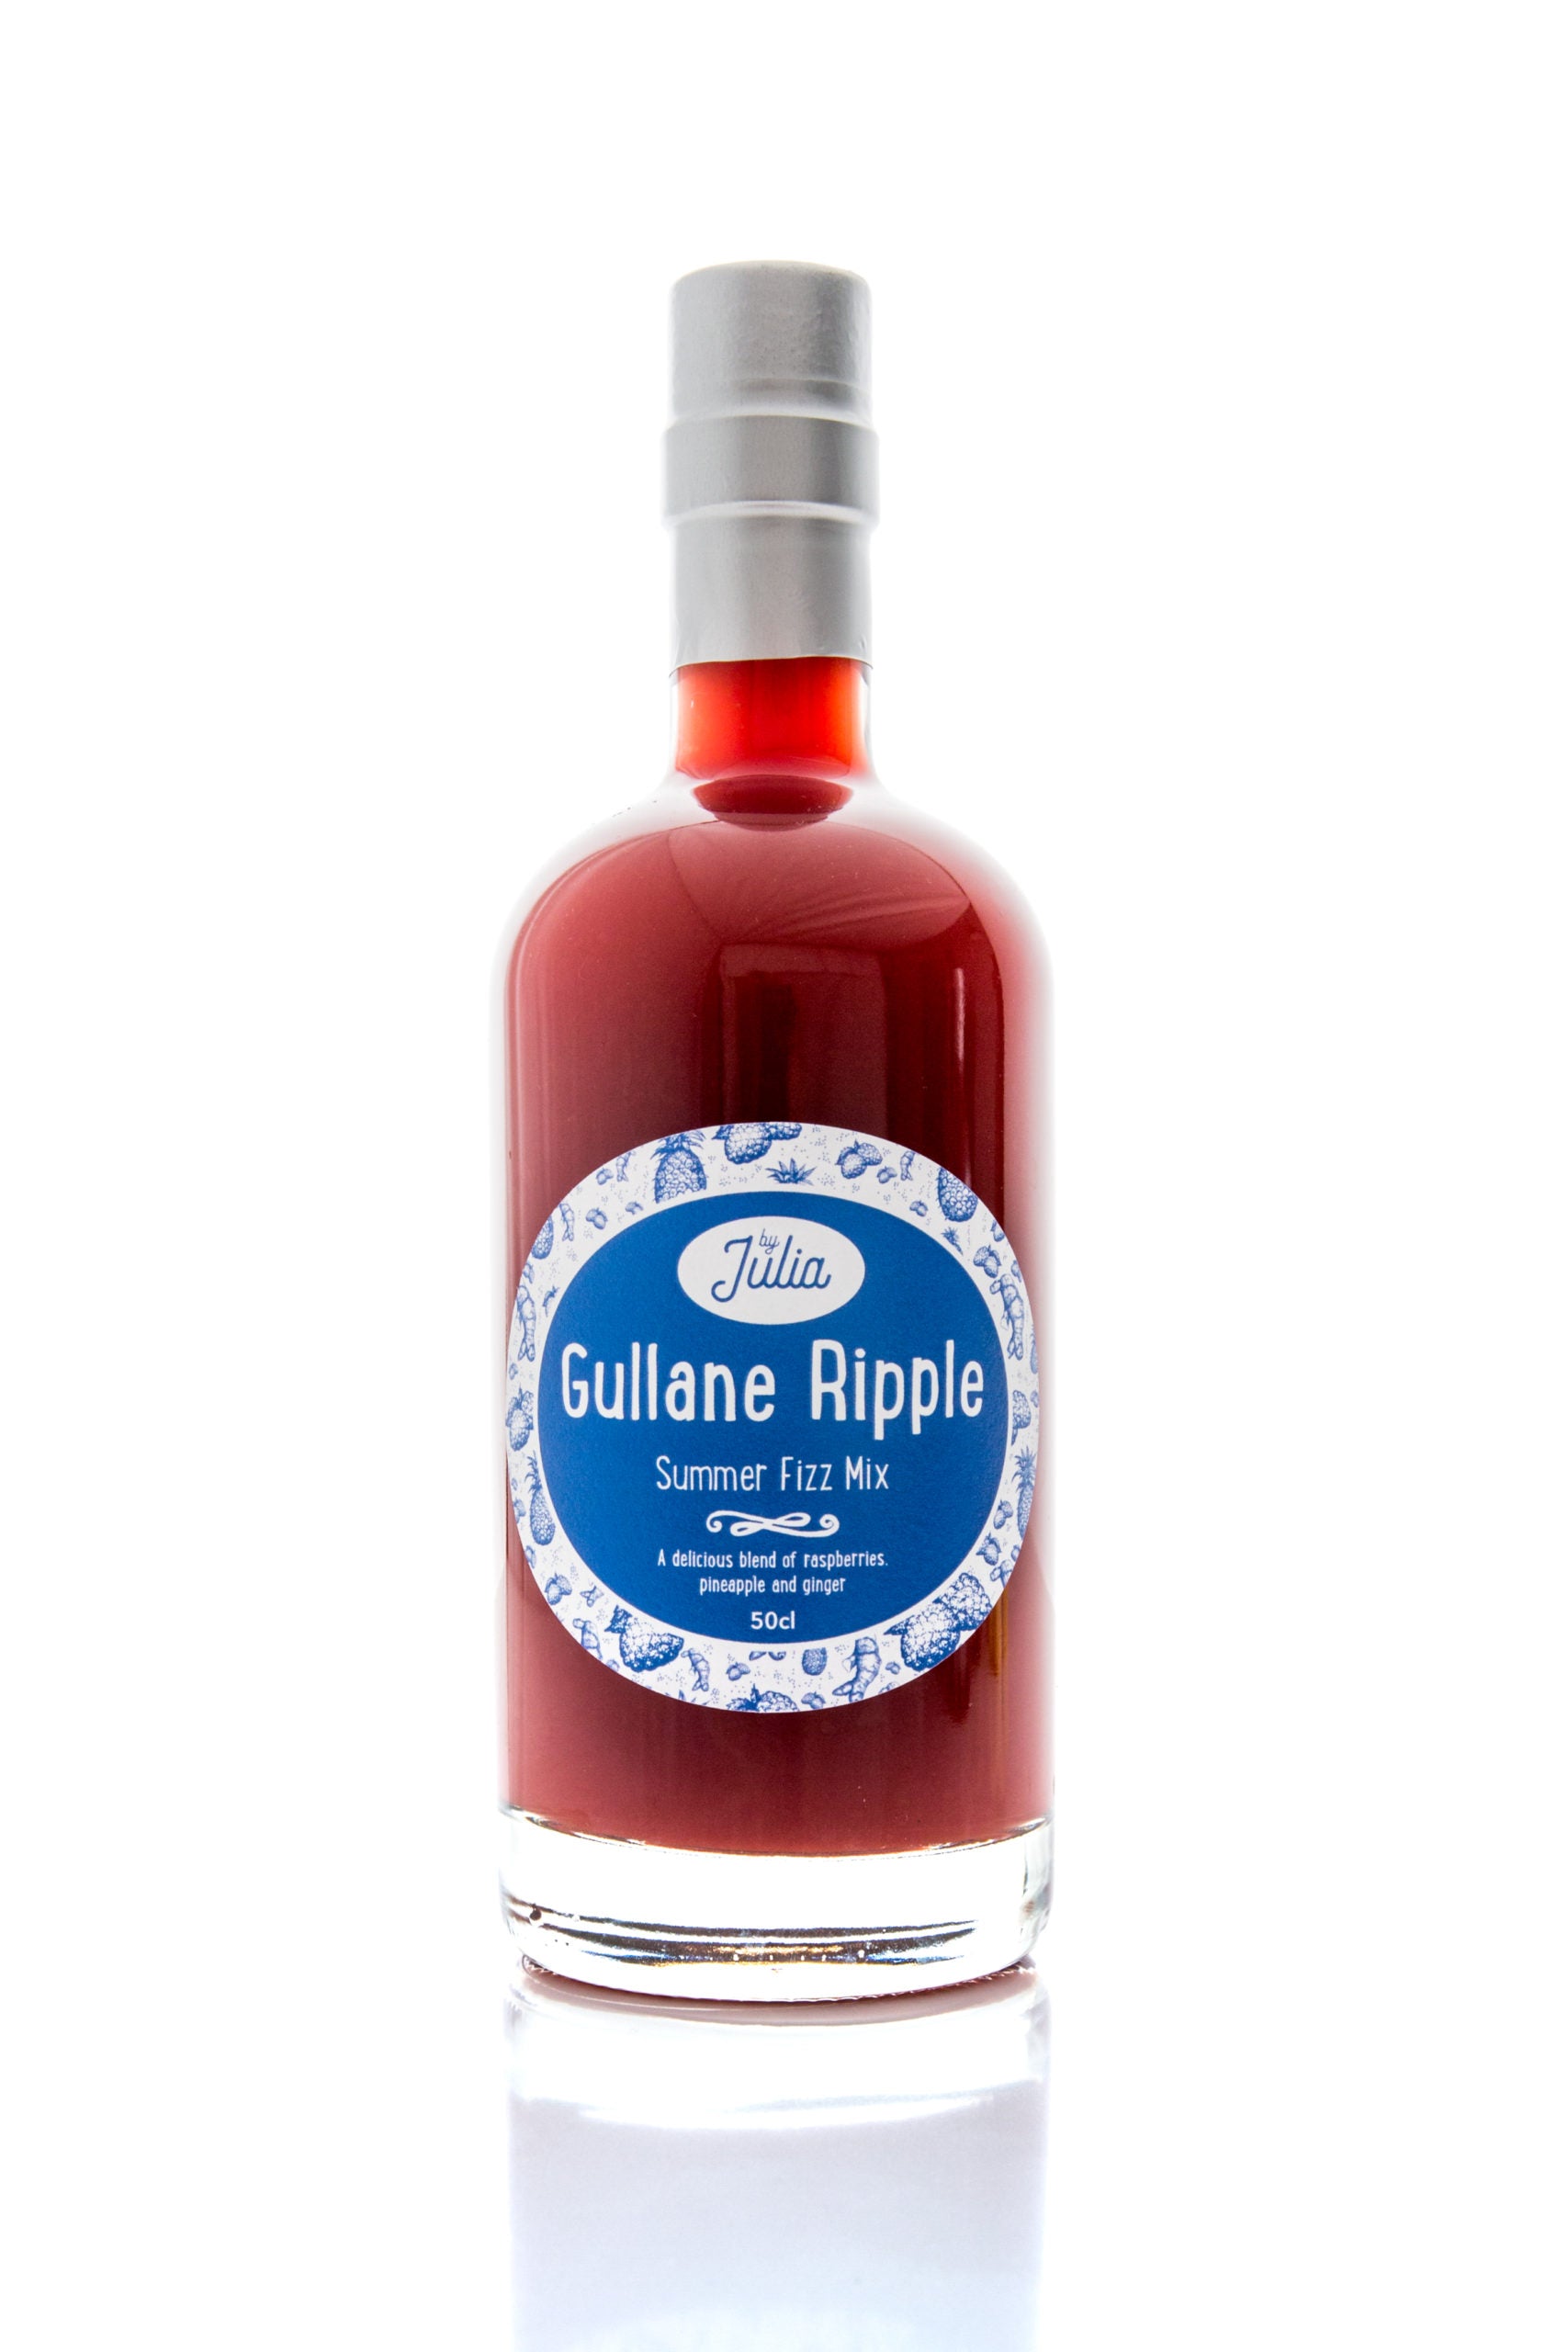 Bottle of Gullane Ripple Summer Fizz Mix on white background